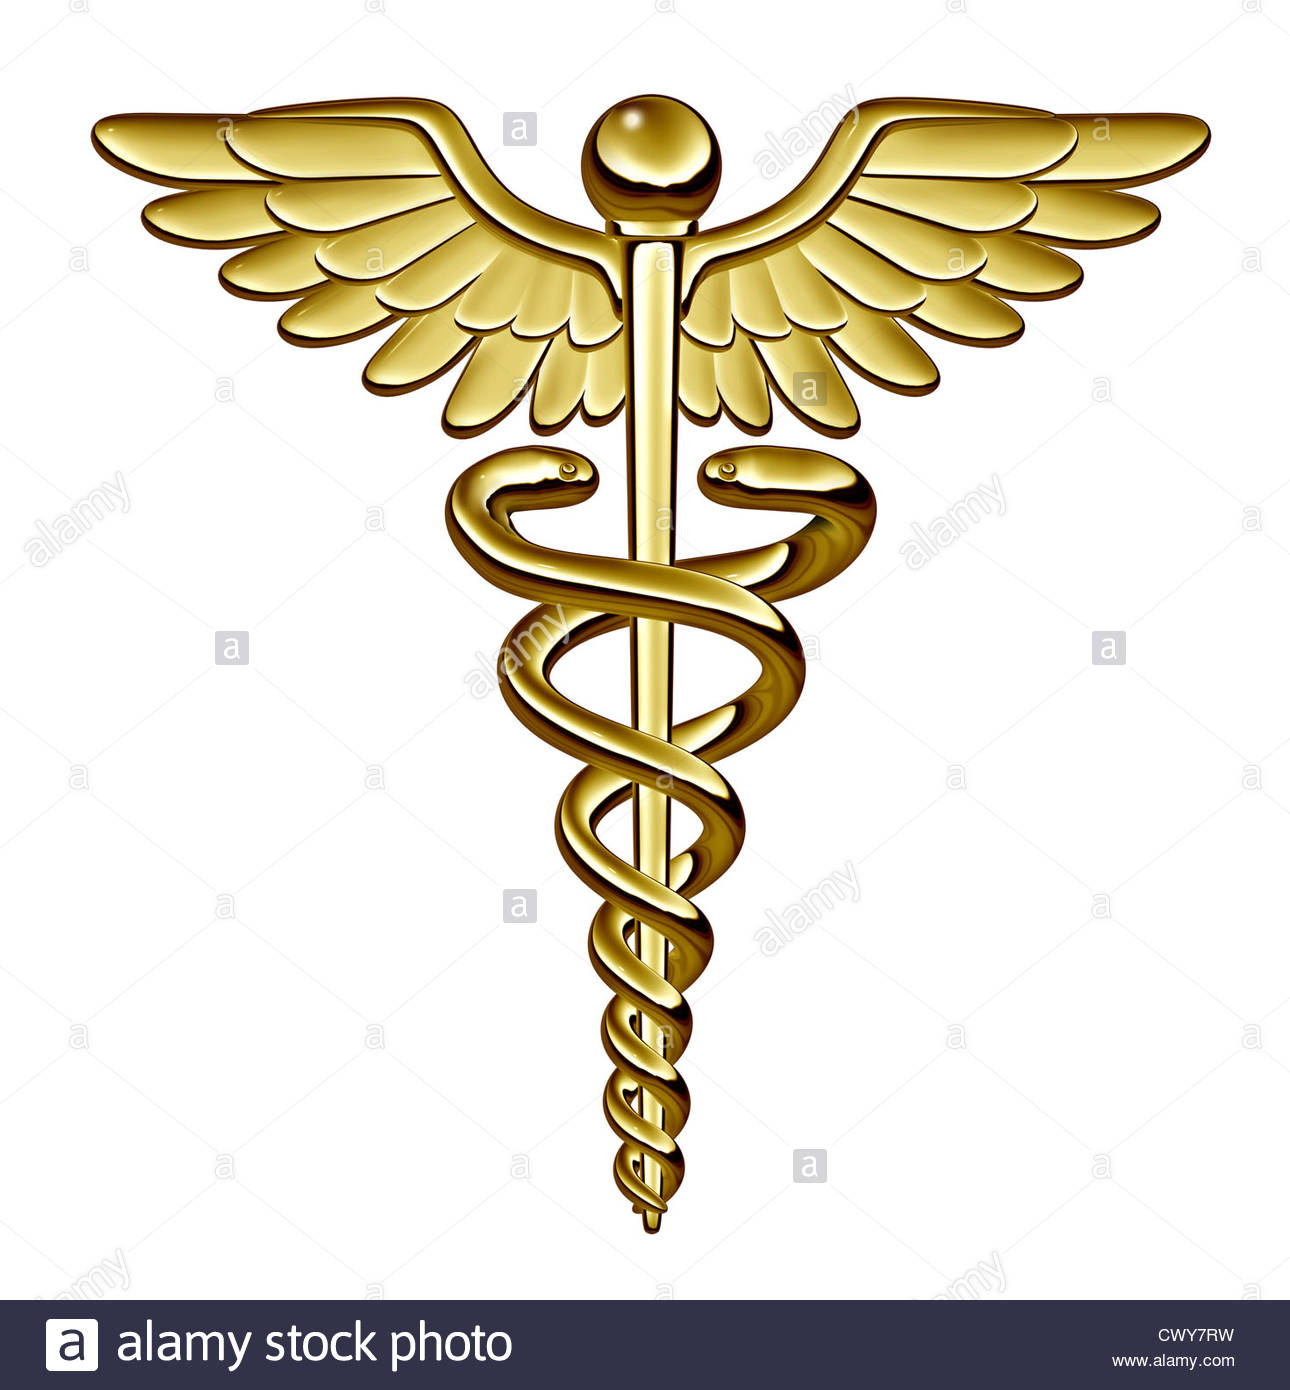 Ambulance, doctor, emergency, health, hospital, medical symbol 